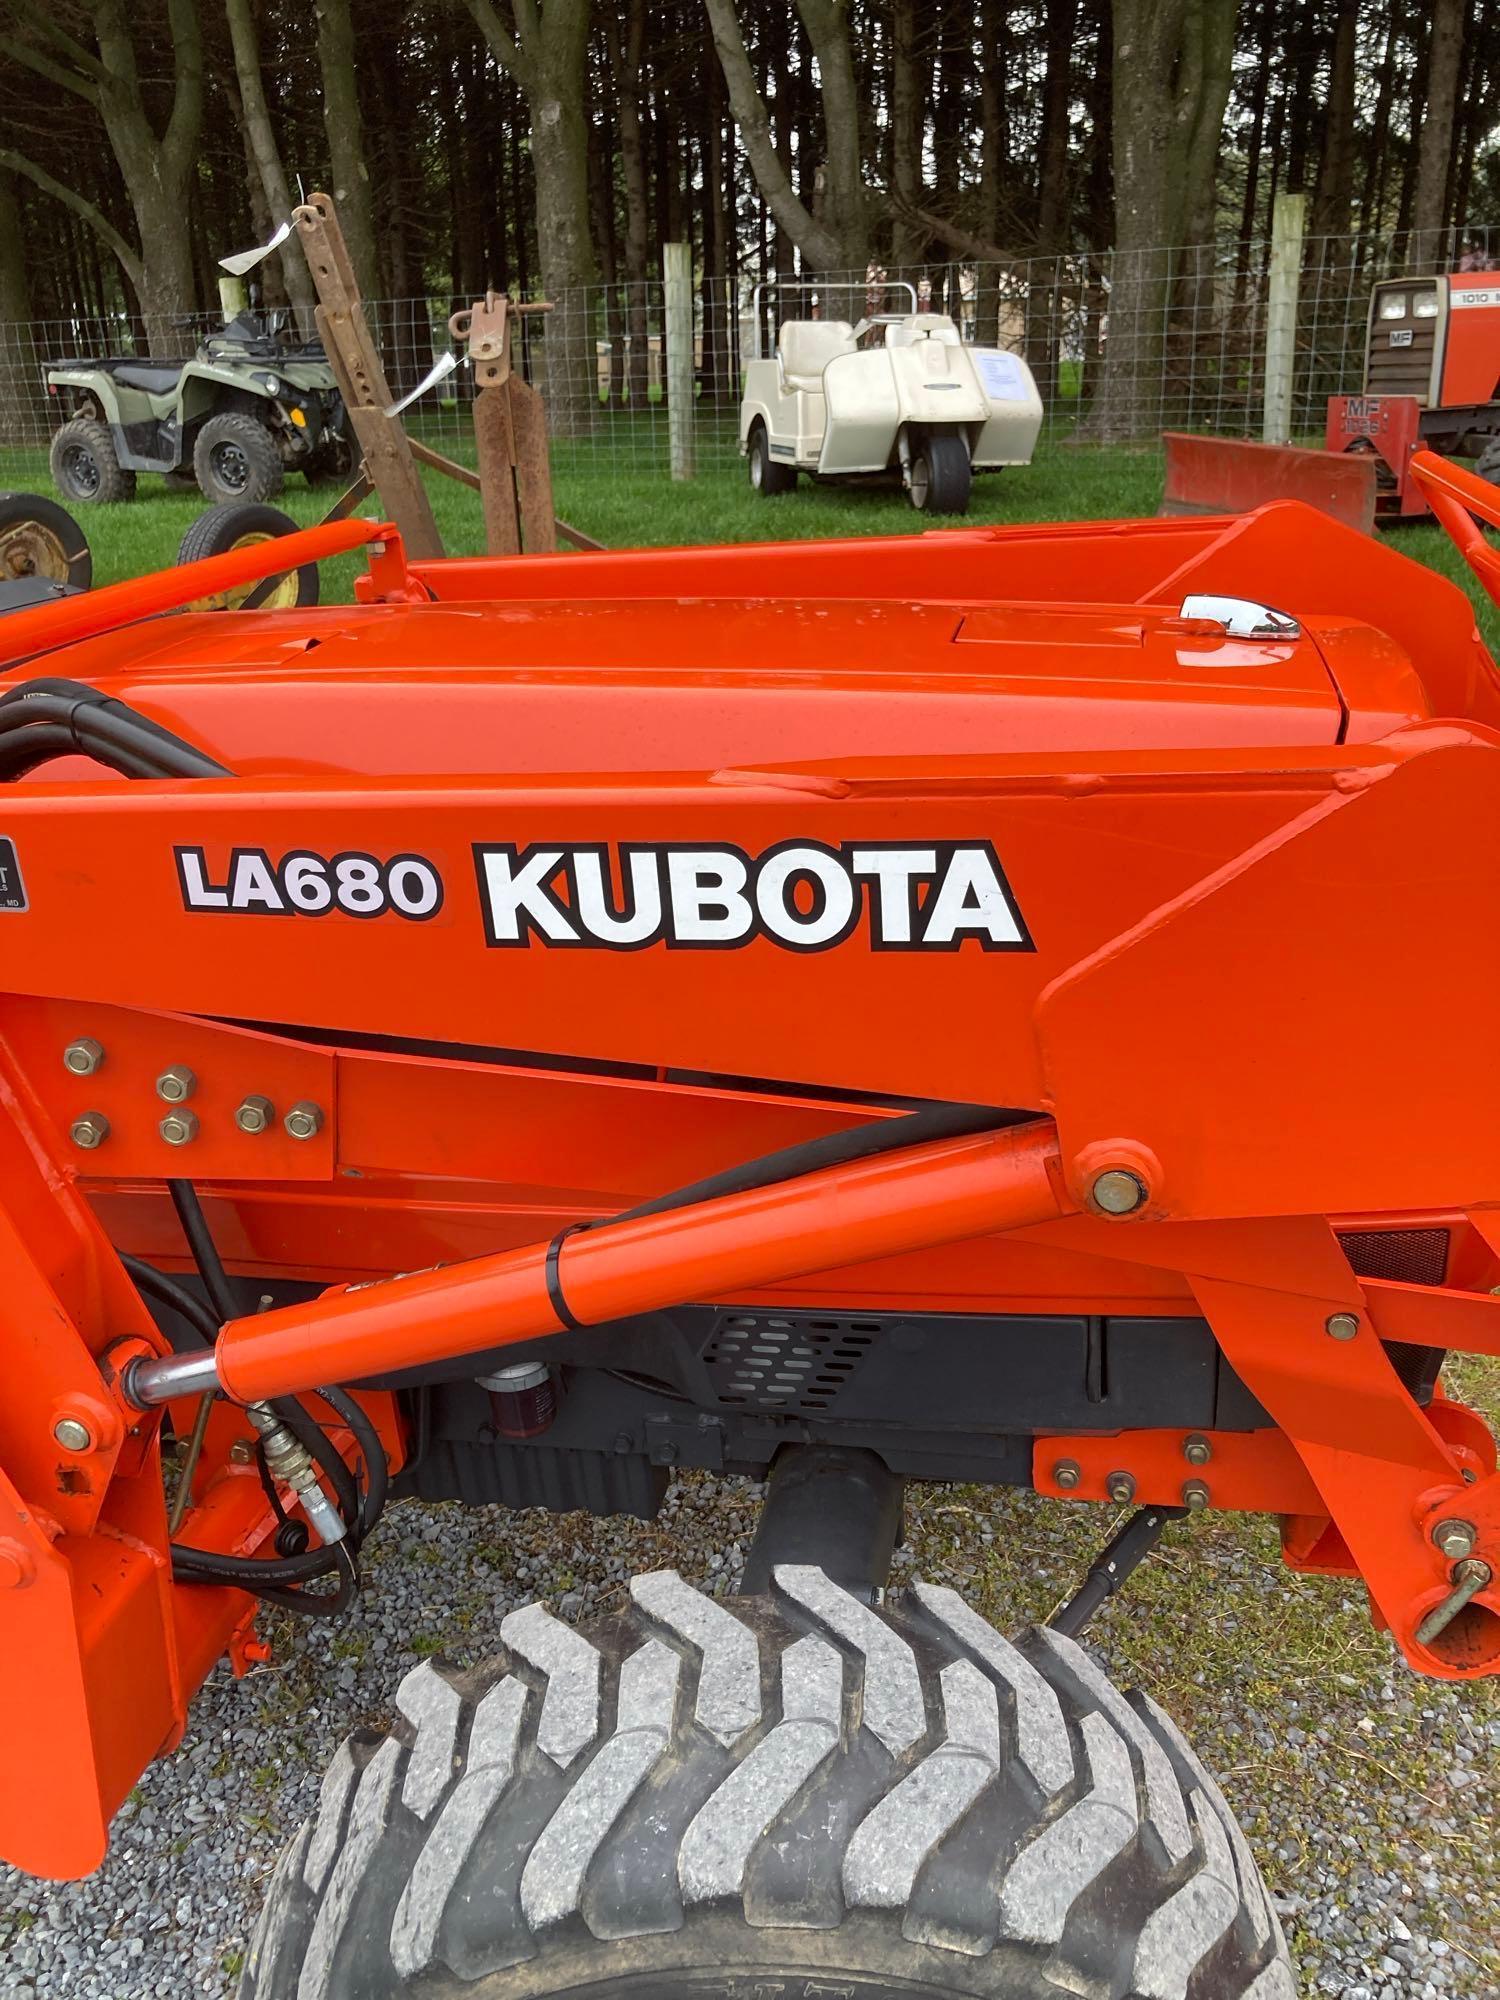 Kubota K3600 Tractor with LA680 loader